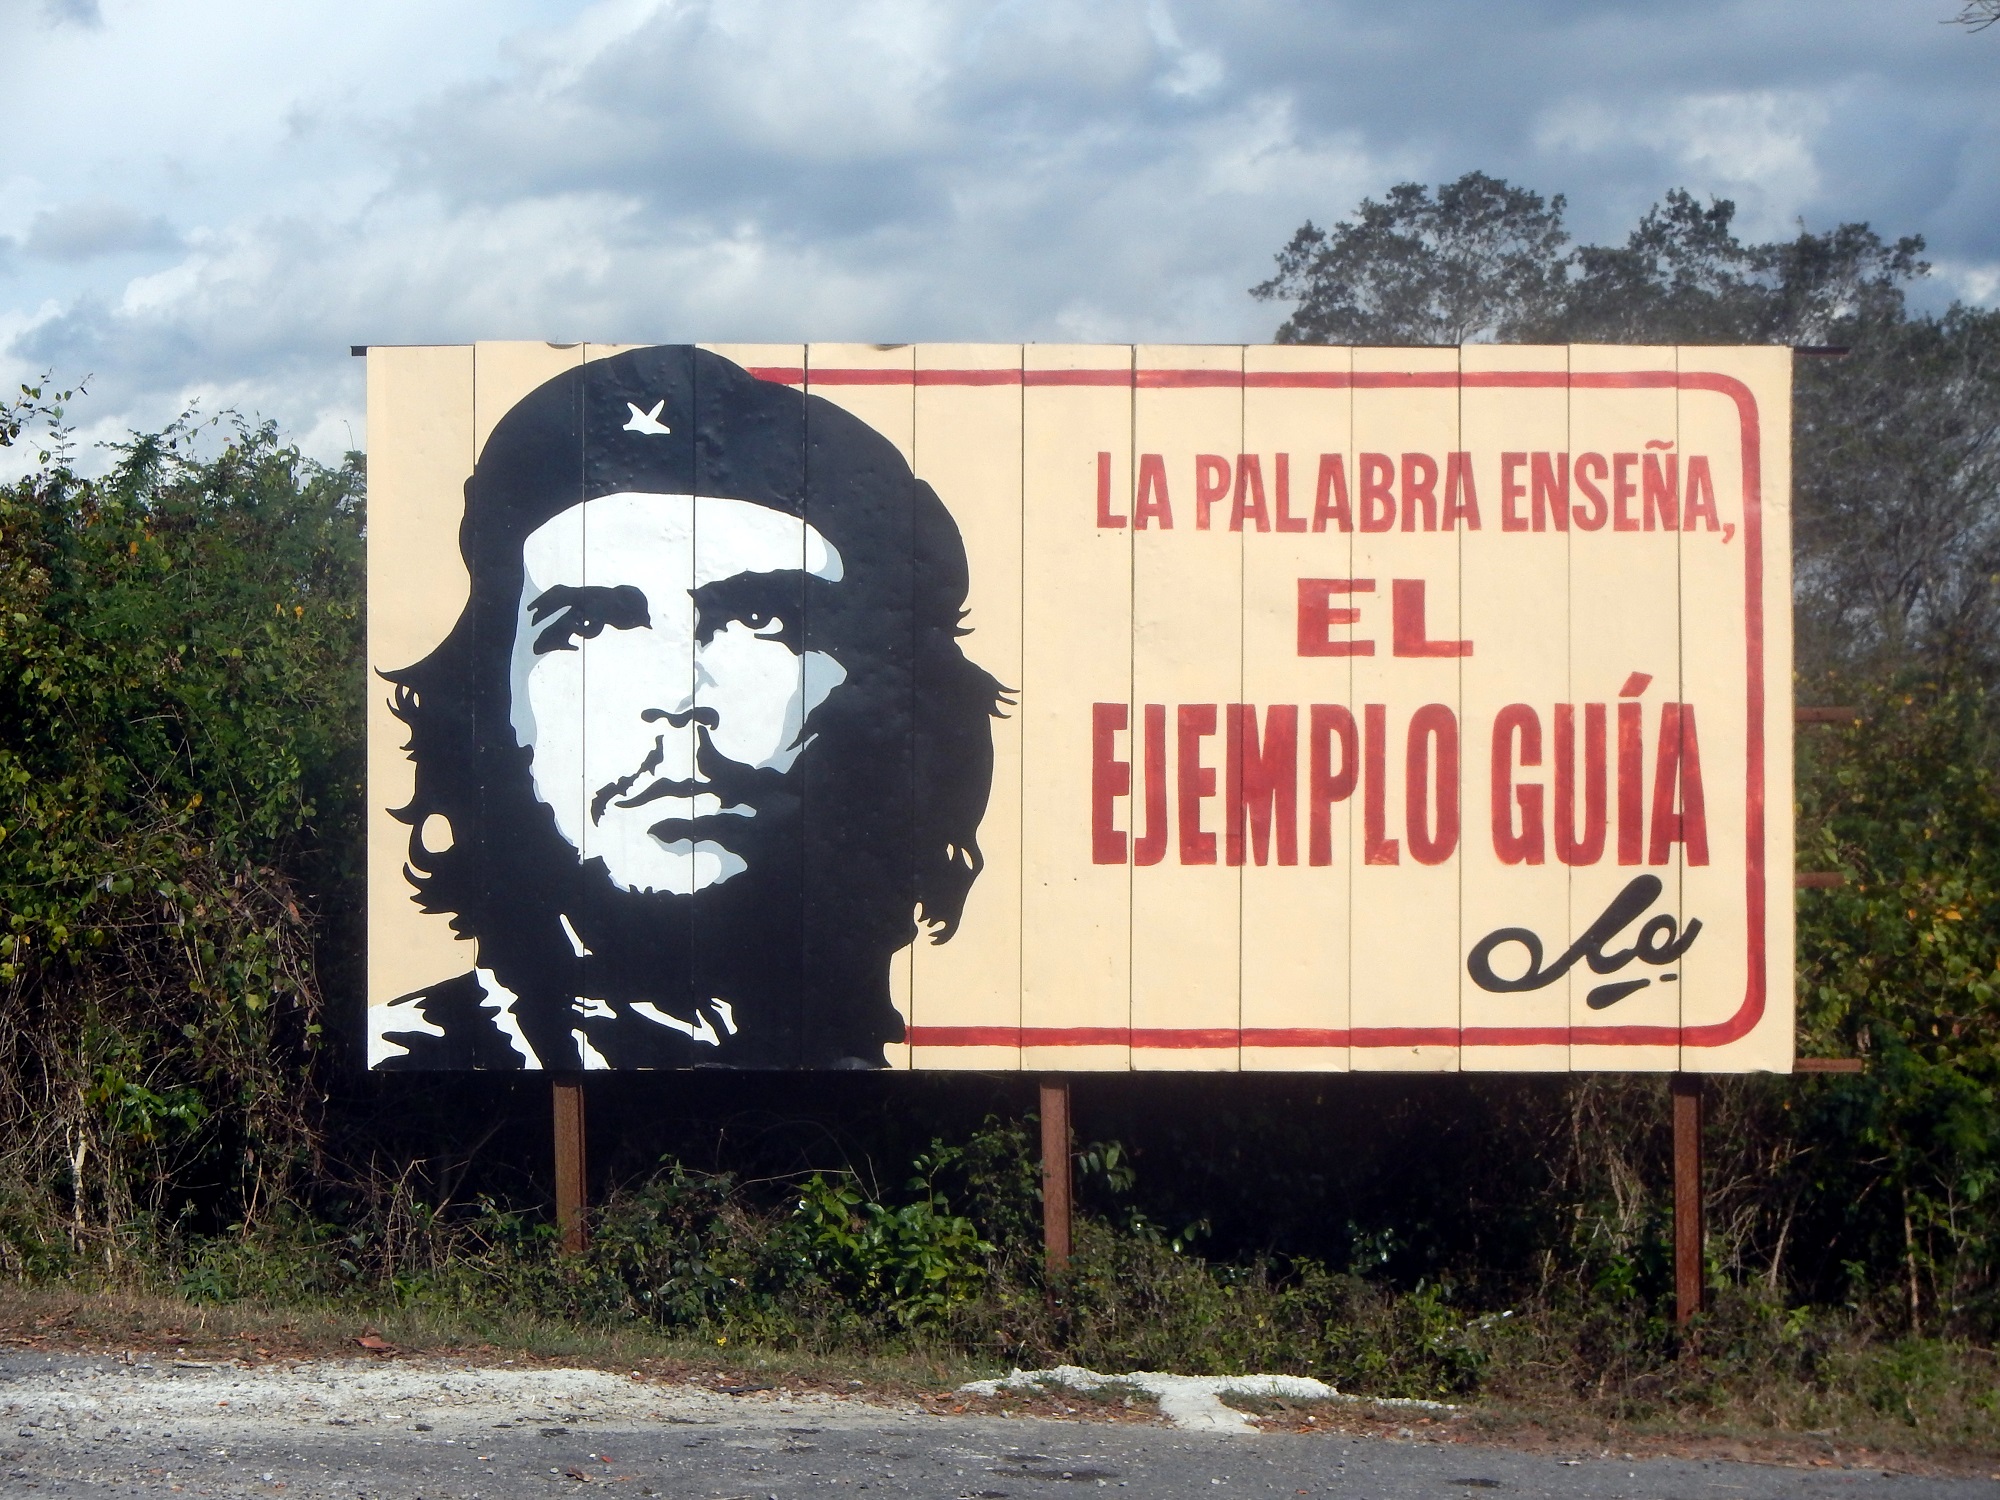 Is Cuba still a communist country?